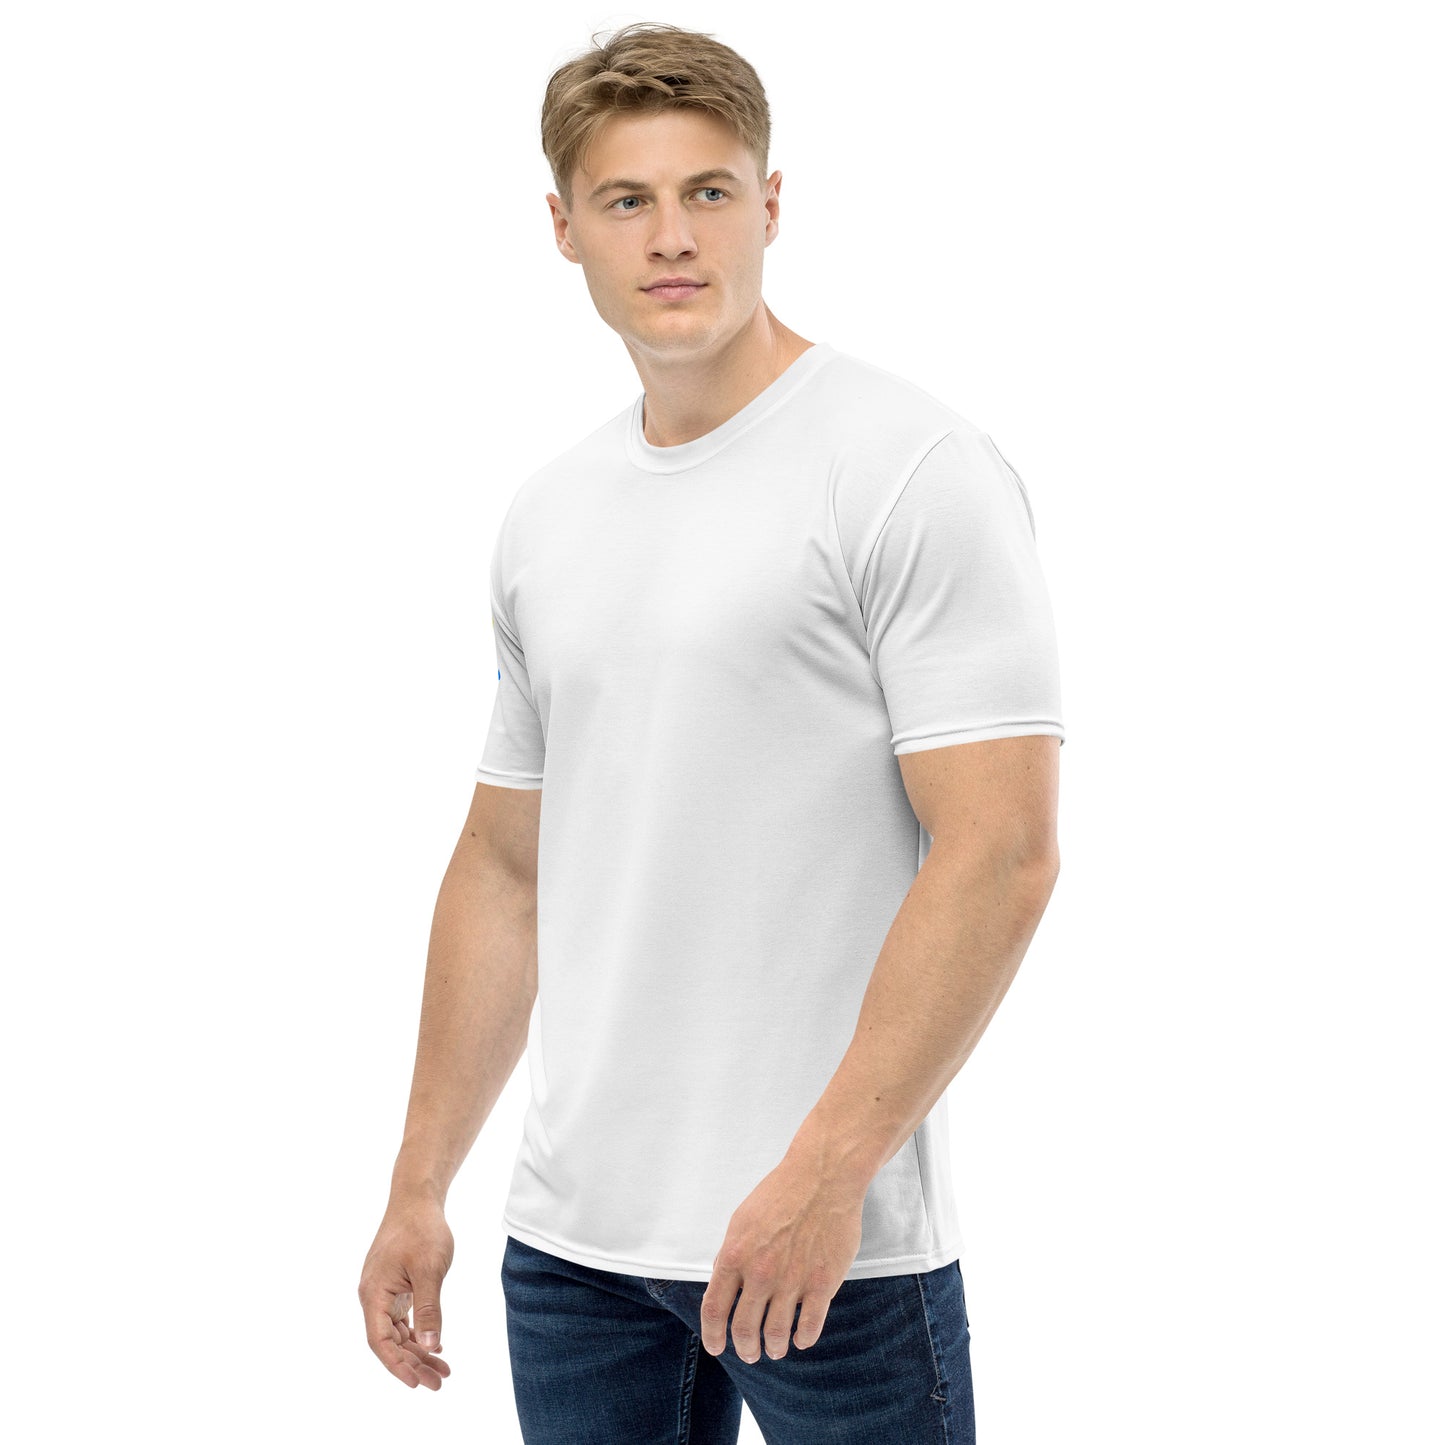 Men's T-shirt - Banamerica Collection